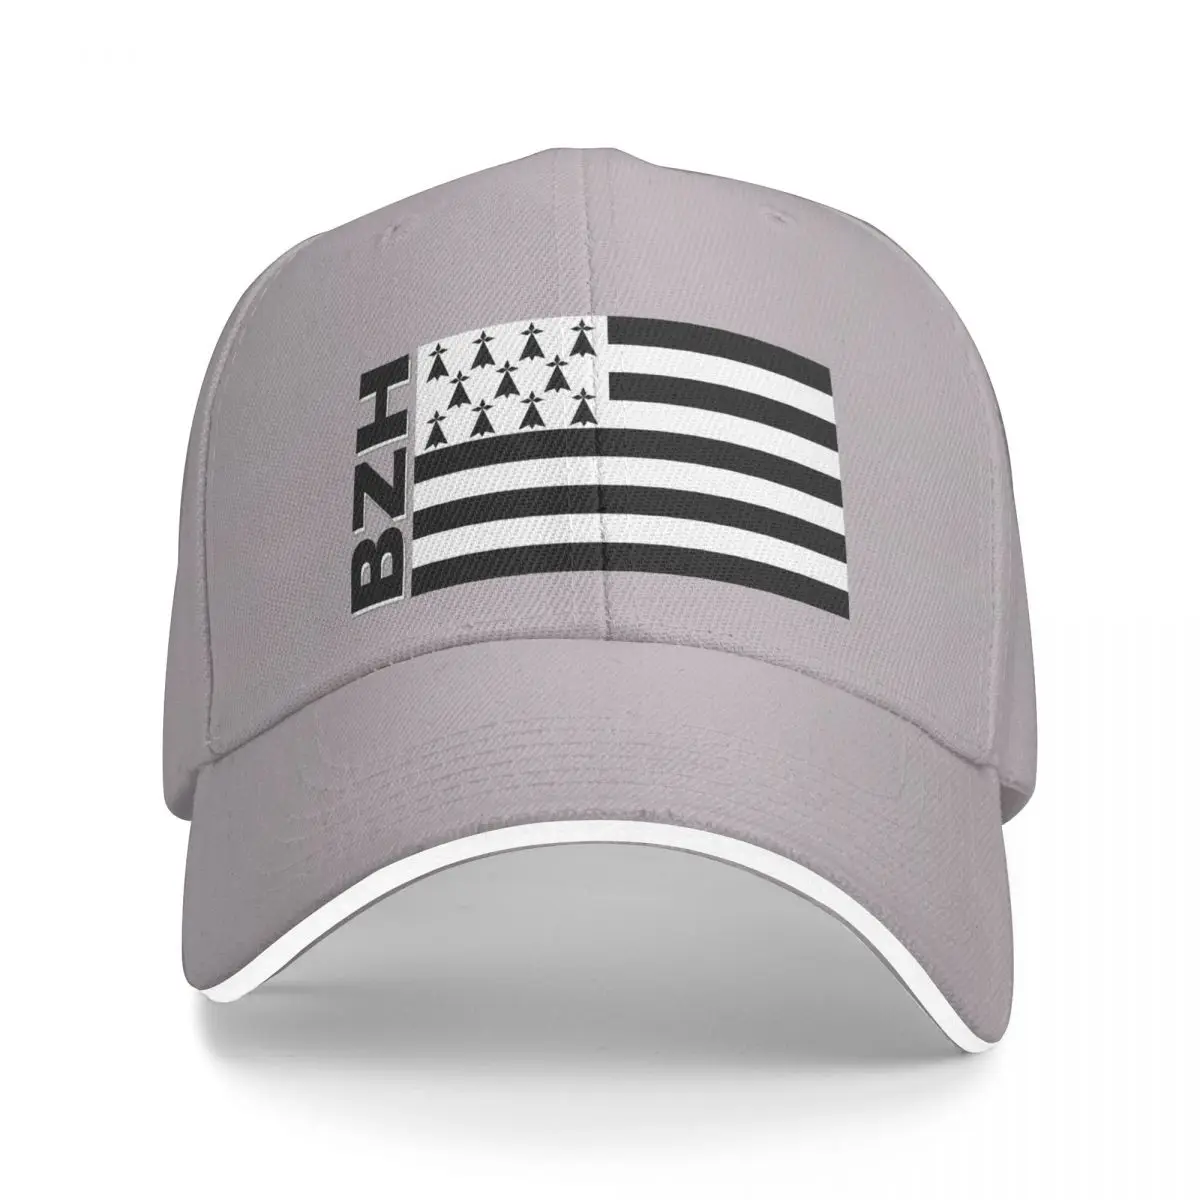 

New BZH - Breizh - Bretagne - Brittany France Cap Baseball Cap Golf cap Bobble hat hats woman Men's